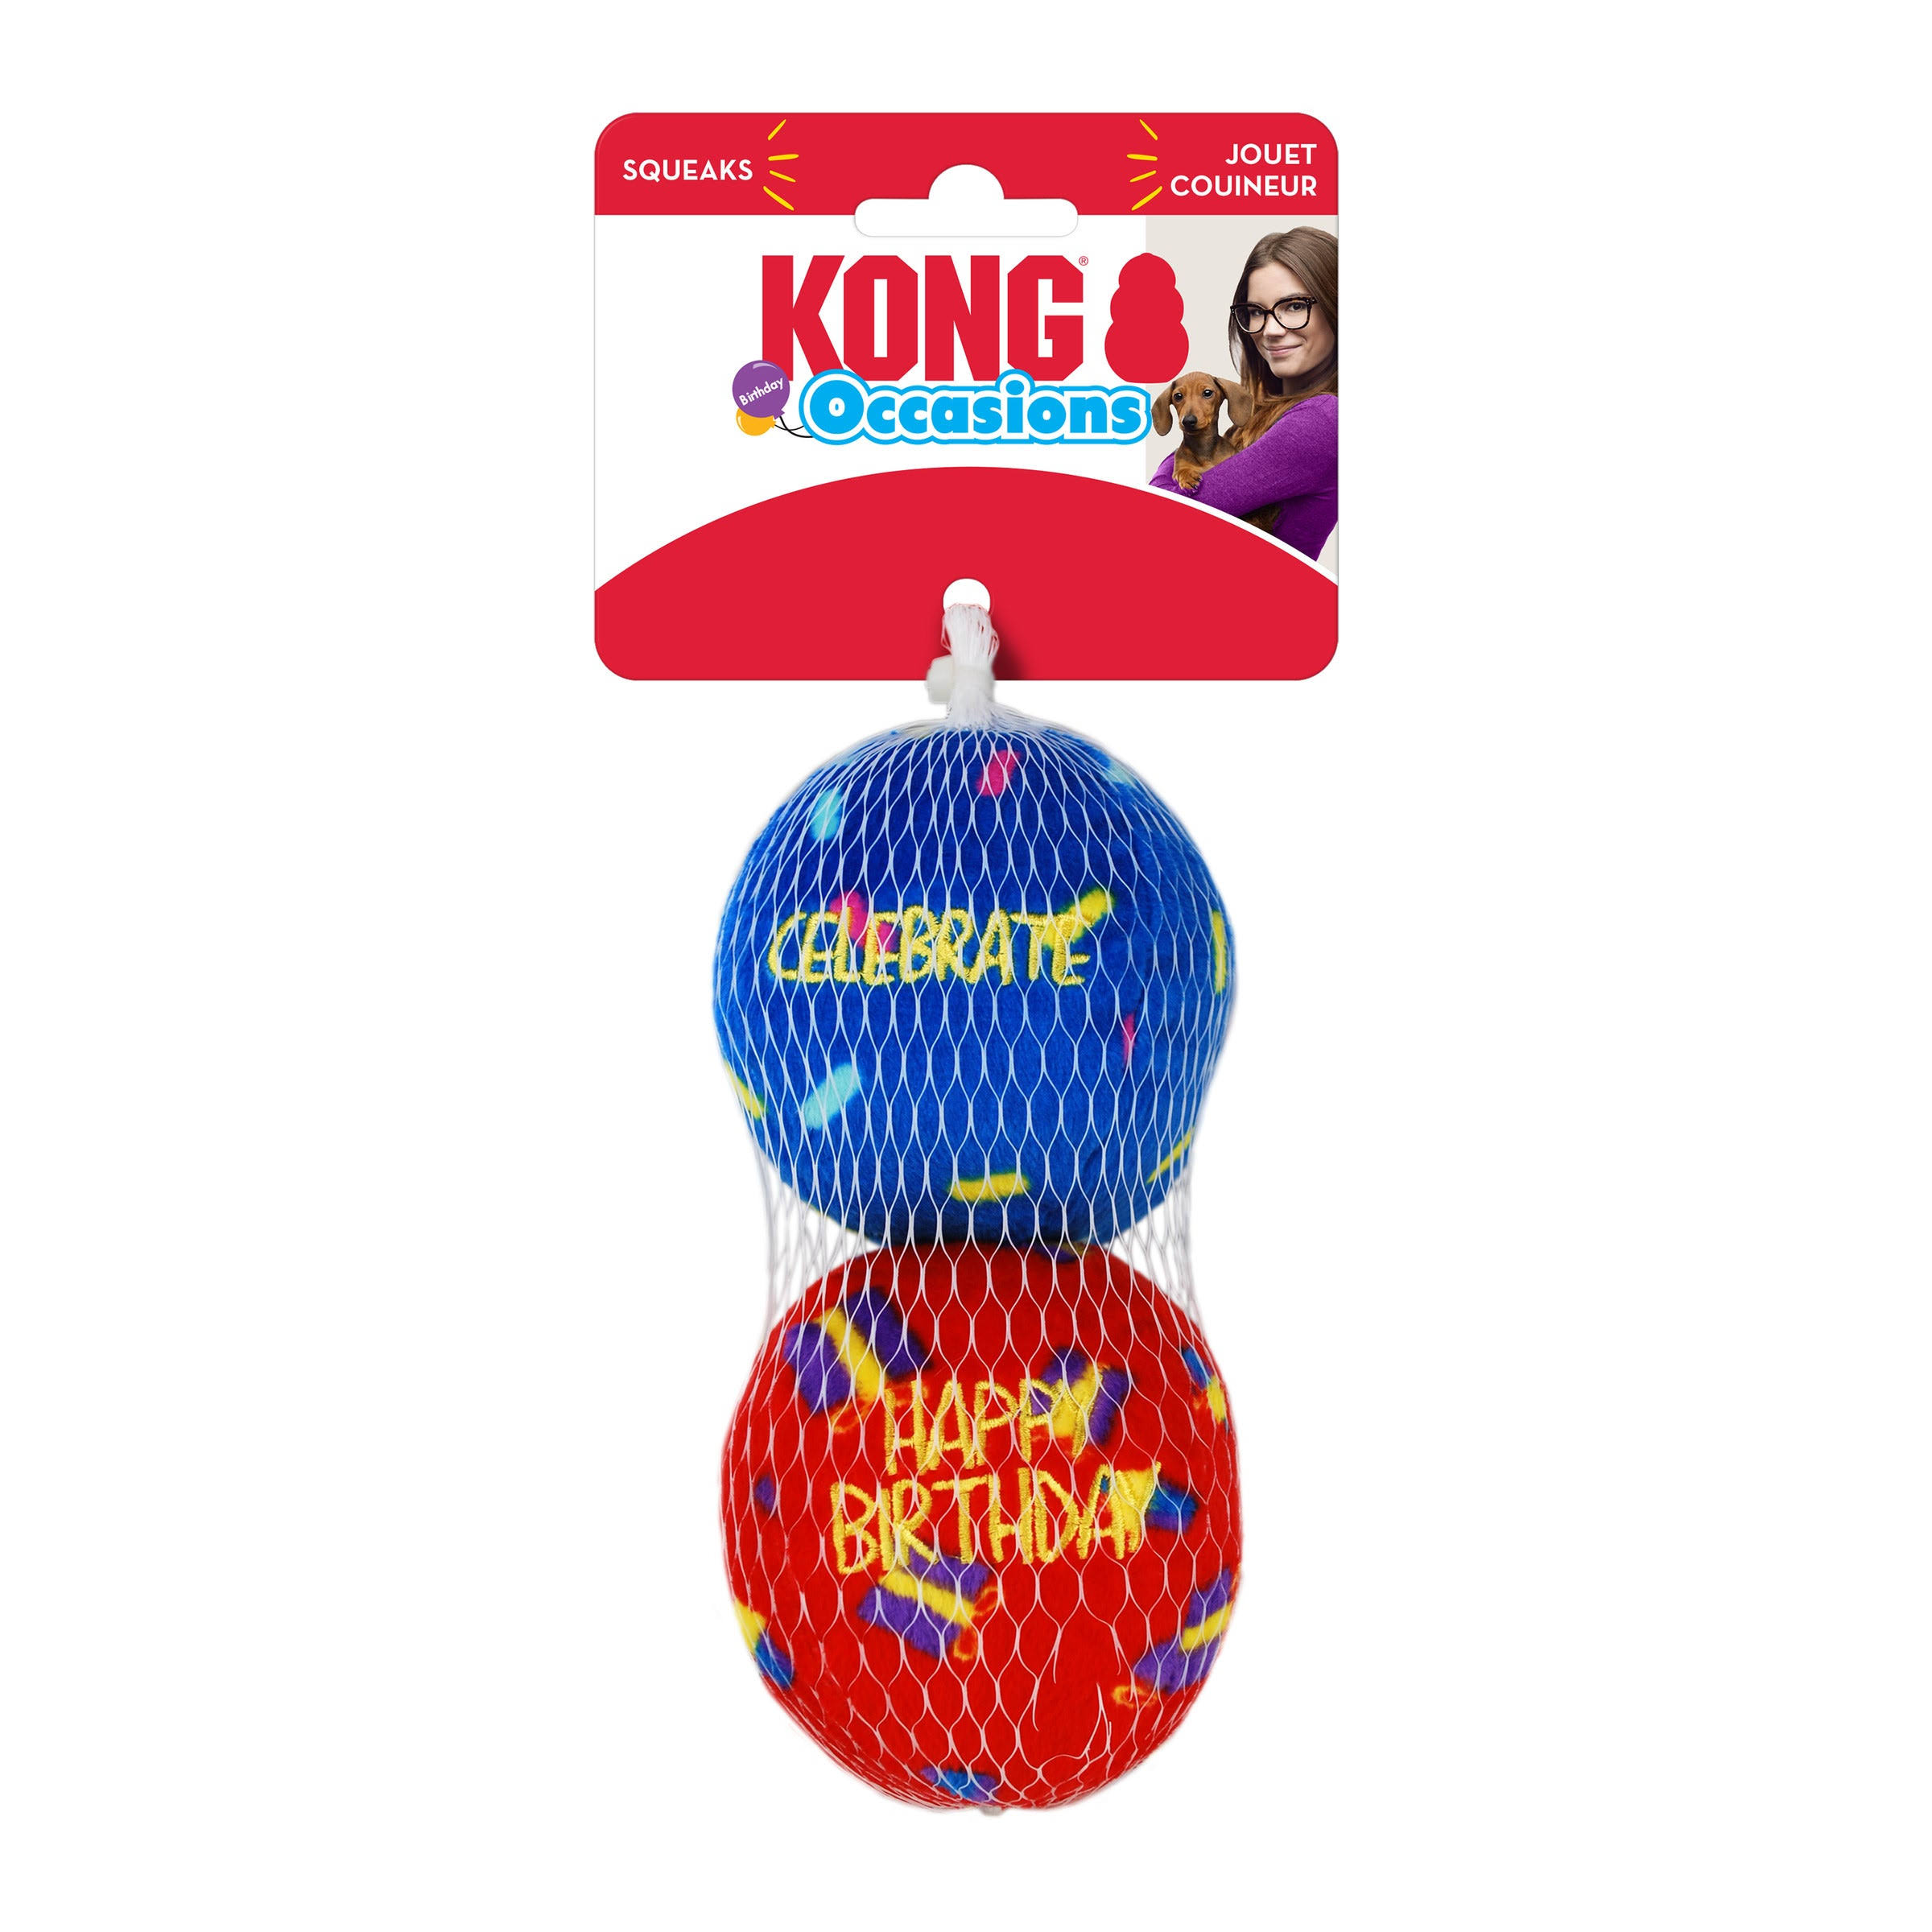 Kong - Occasions Birthday Balls - Medium (2 Pack)